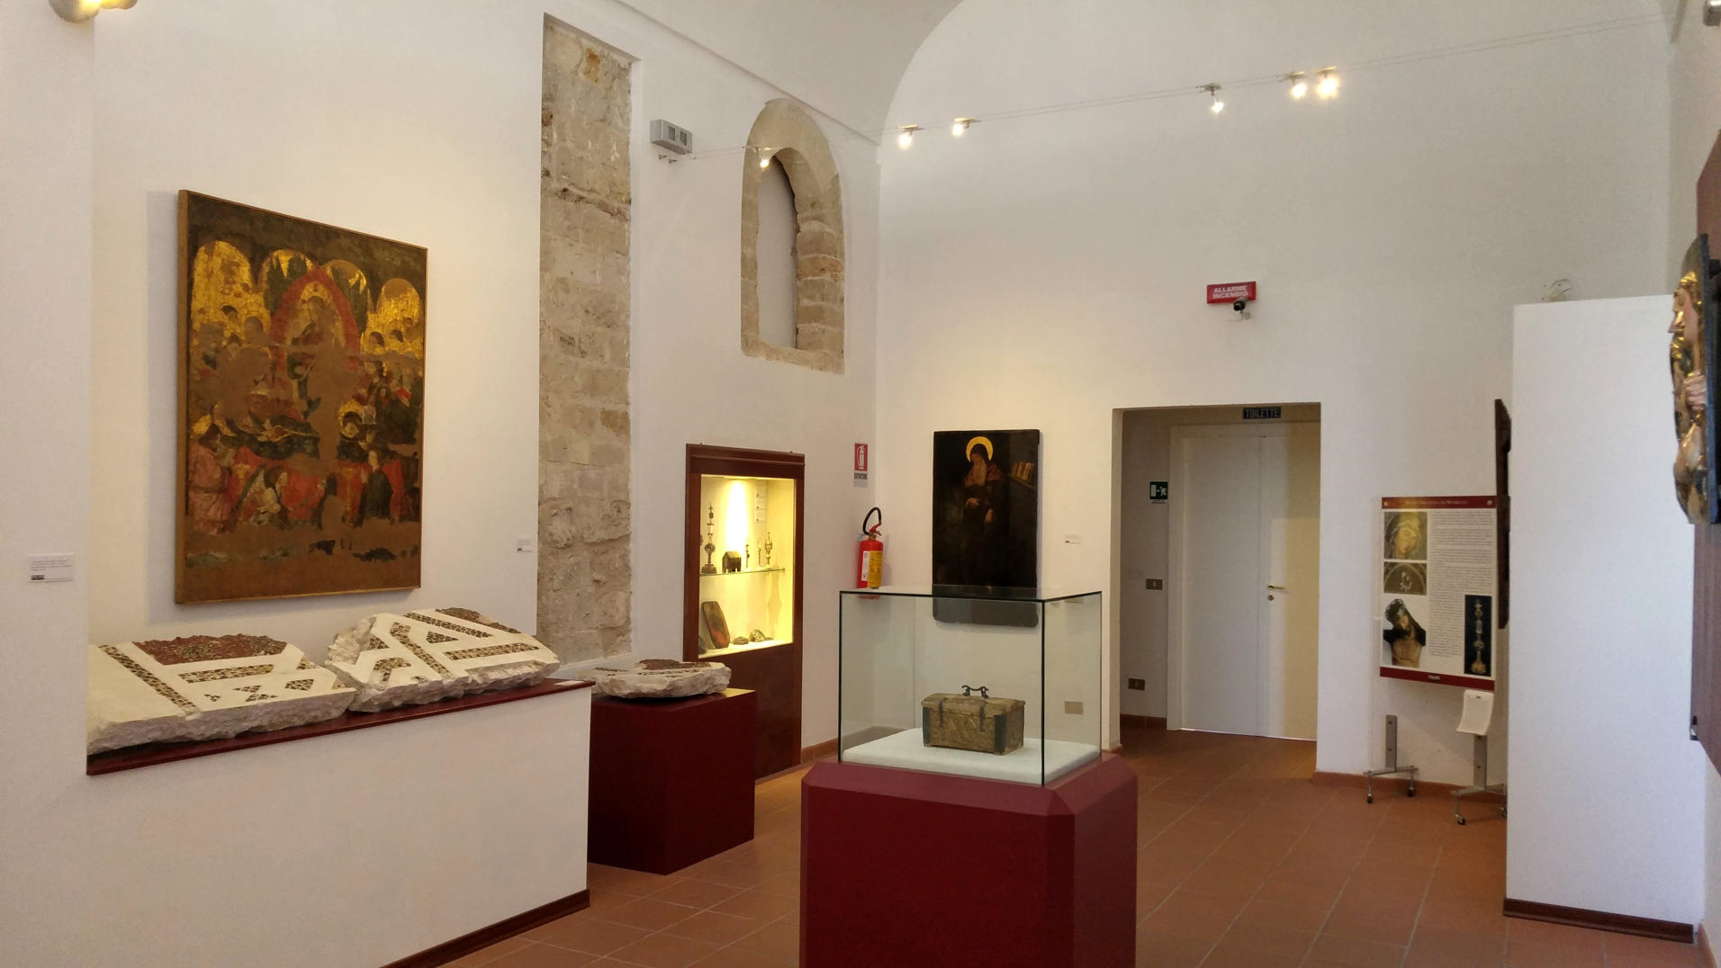 Museo Diocesano de Monreale - sala expositiva primera planta